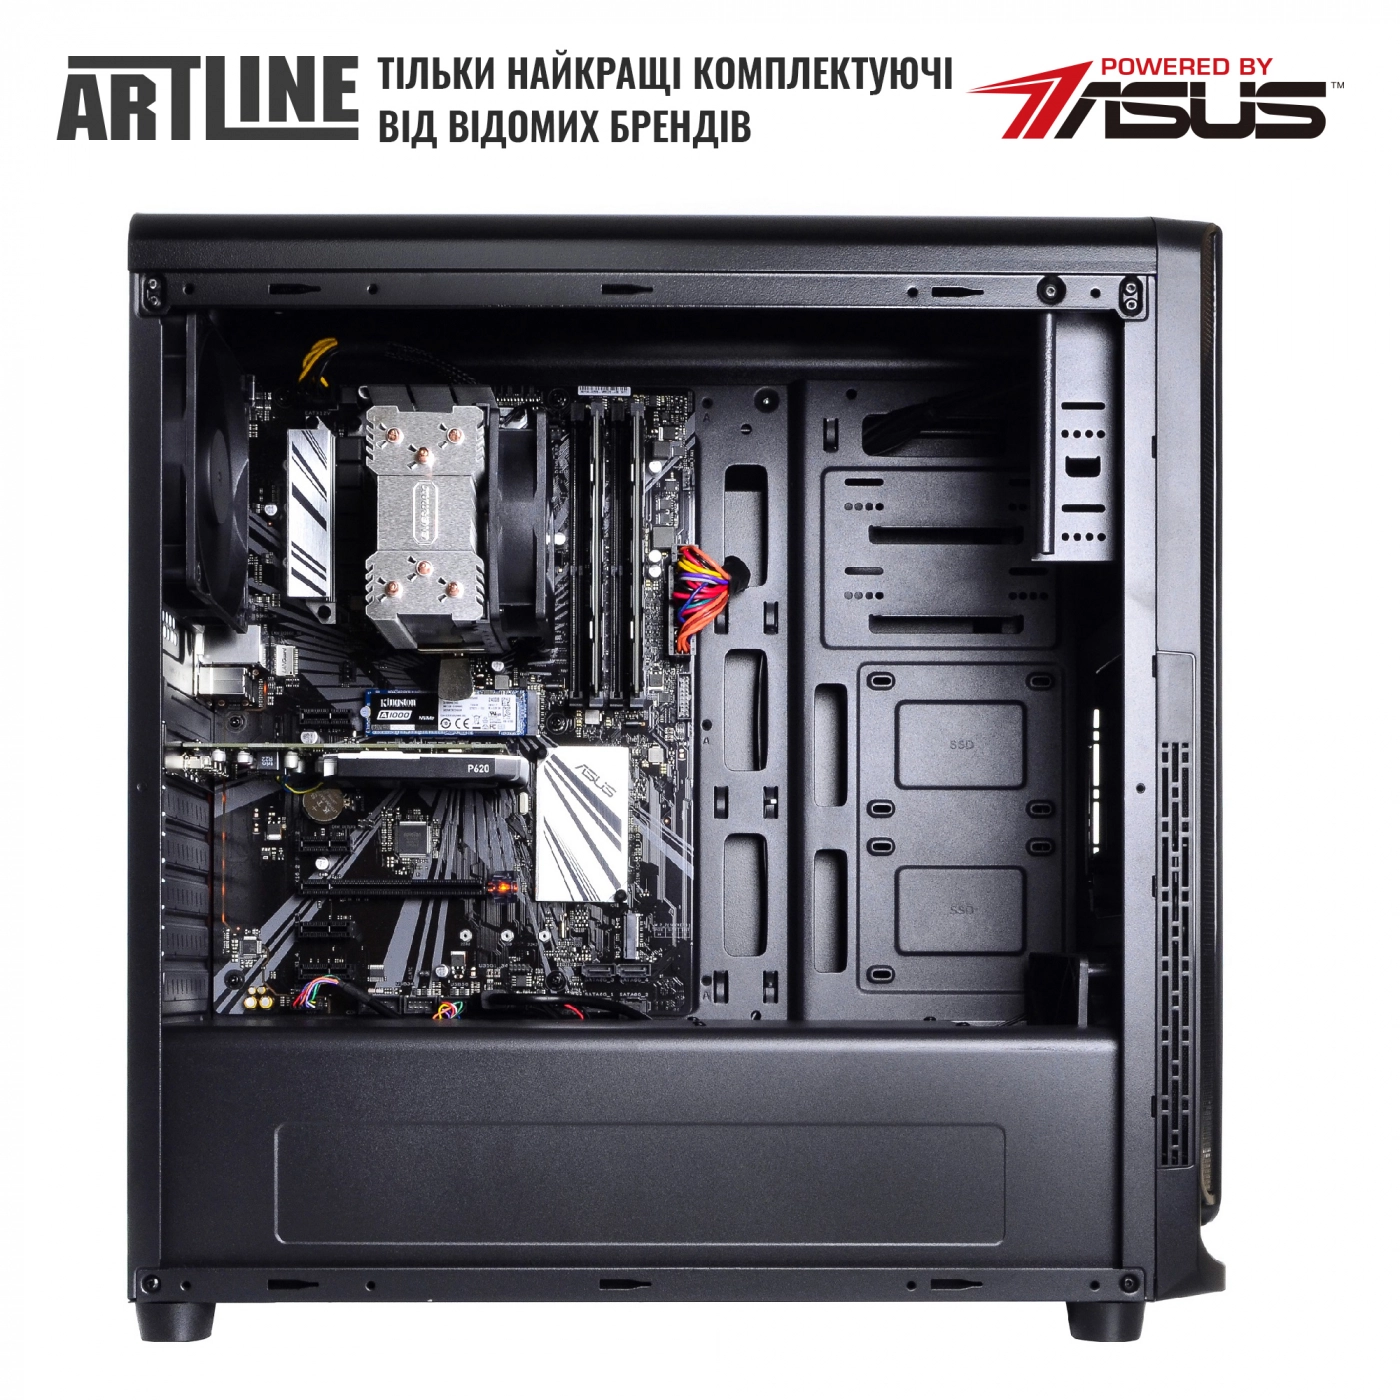 Купити Сервер ARTLINE Business T25v25 - фото 5